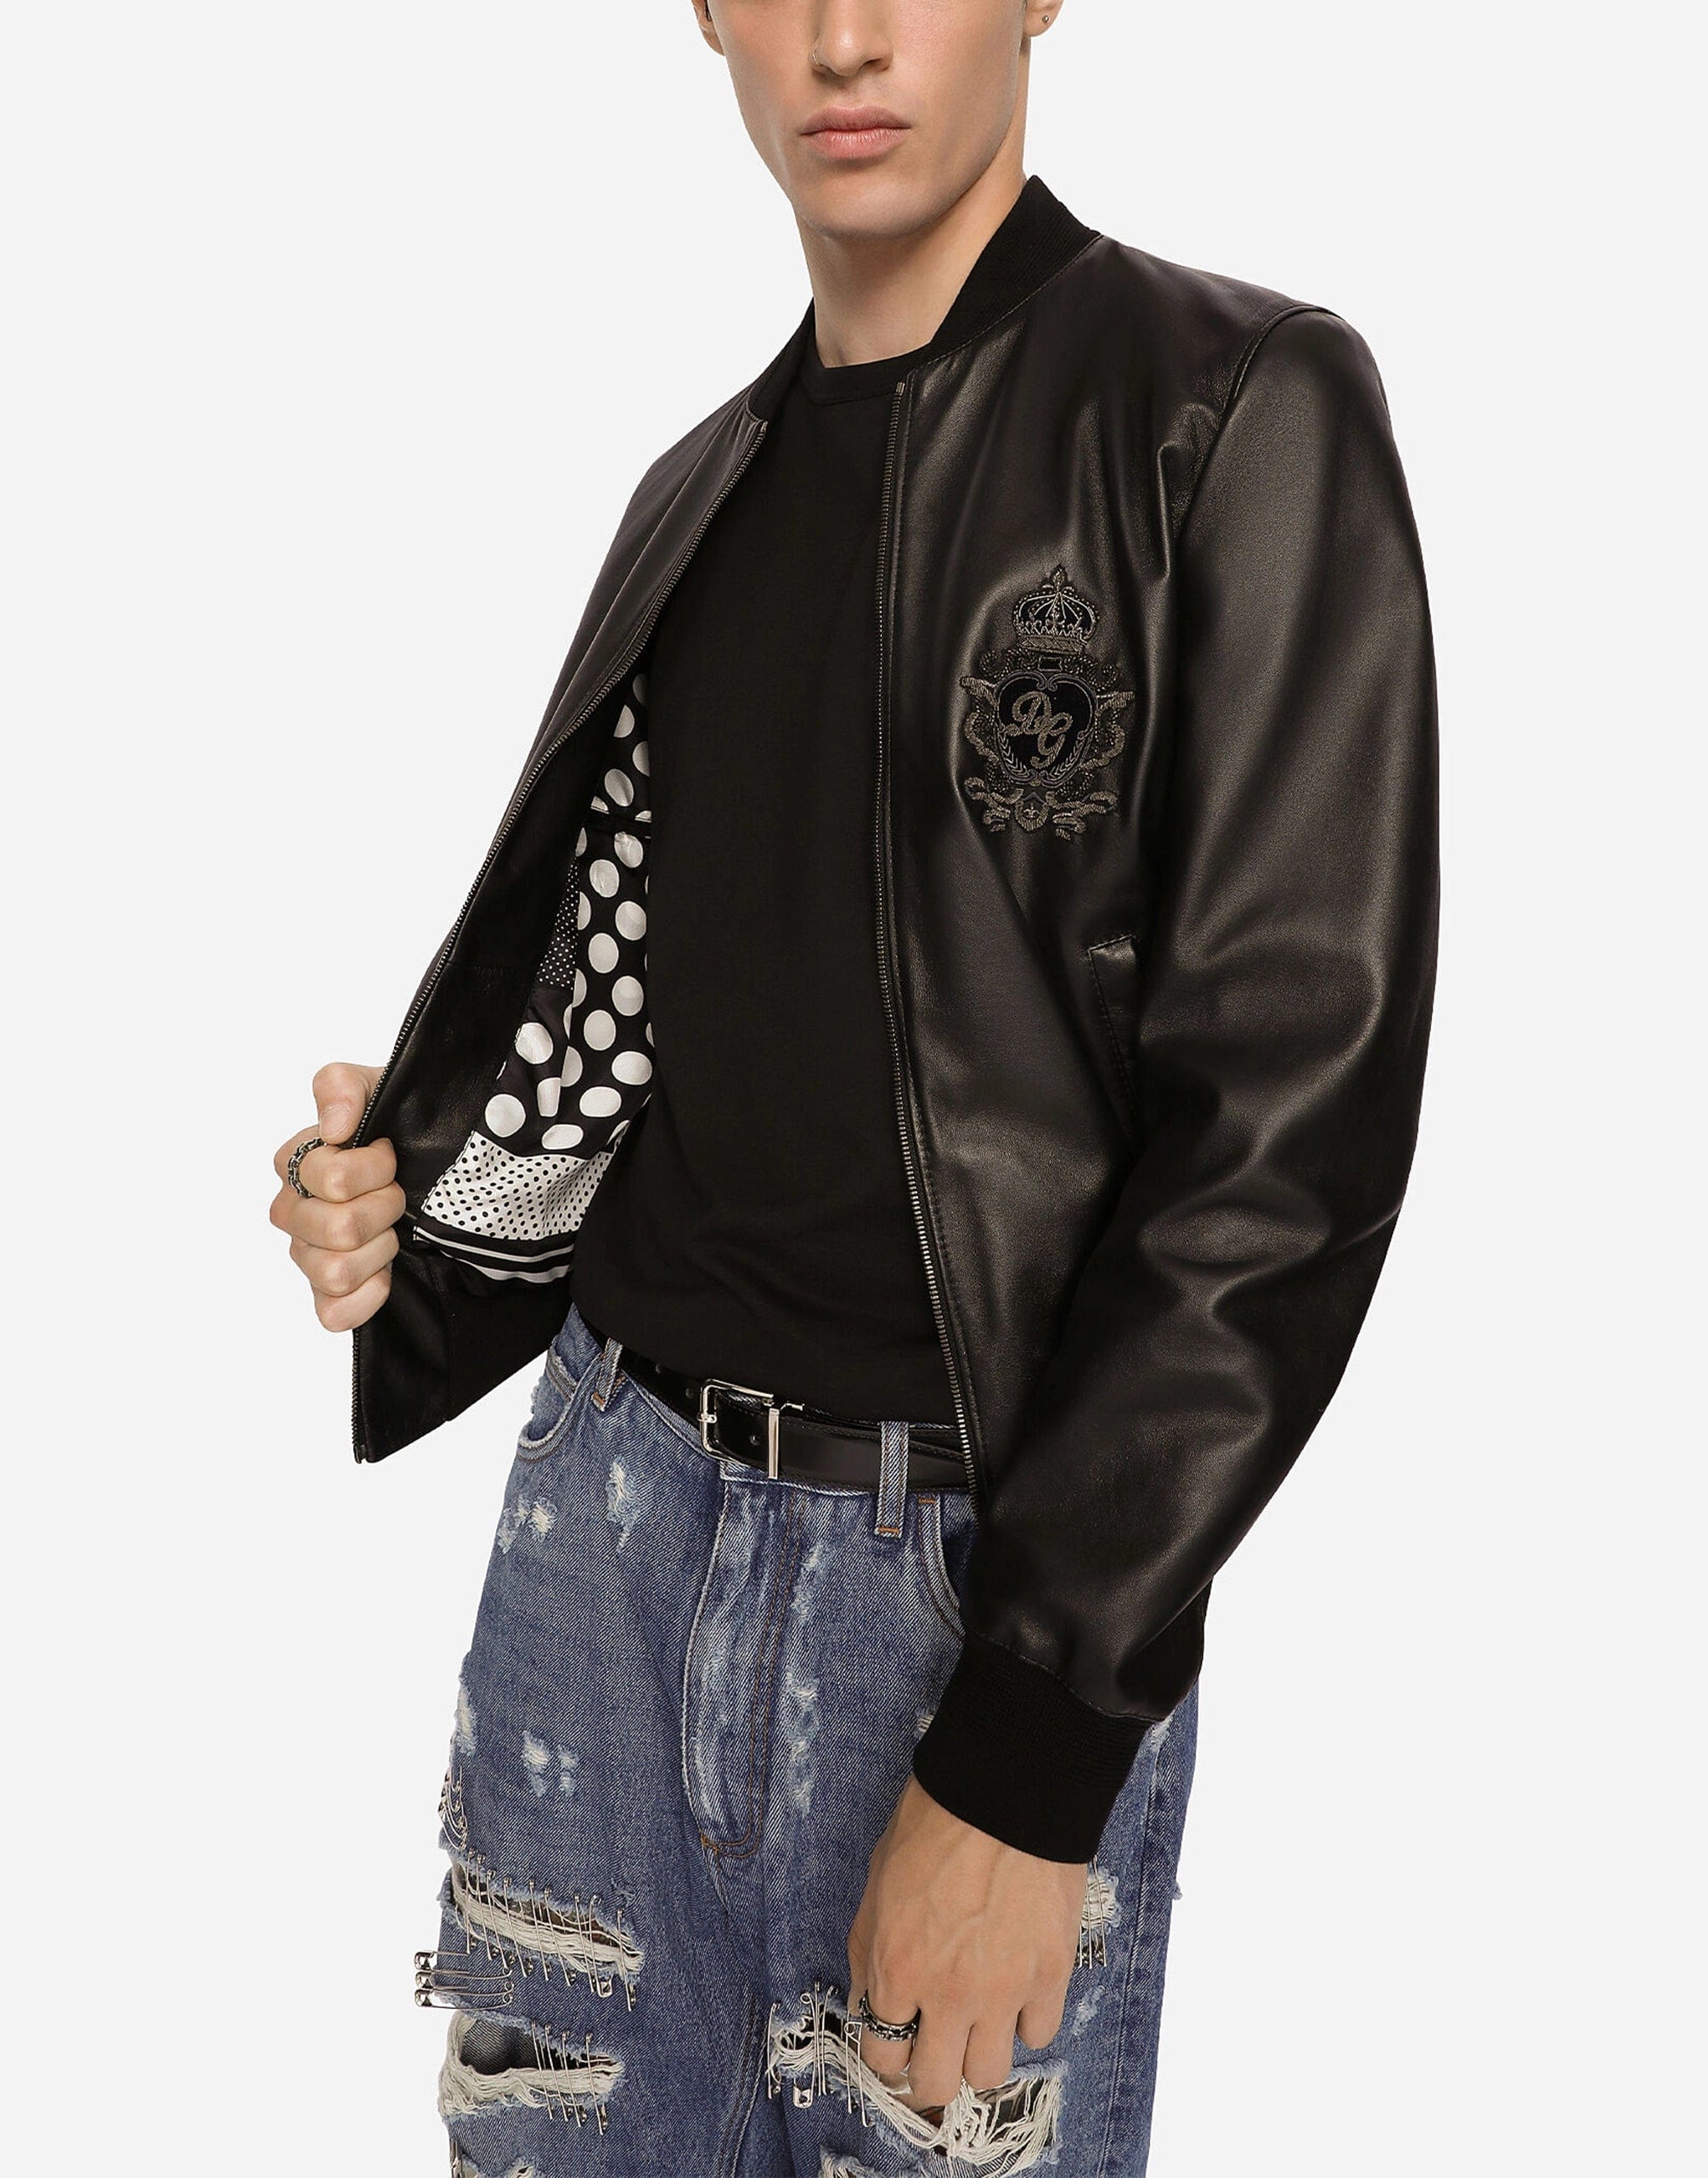 Dolce & Gabbana DG Patch Leather Bomber Jacket